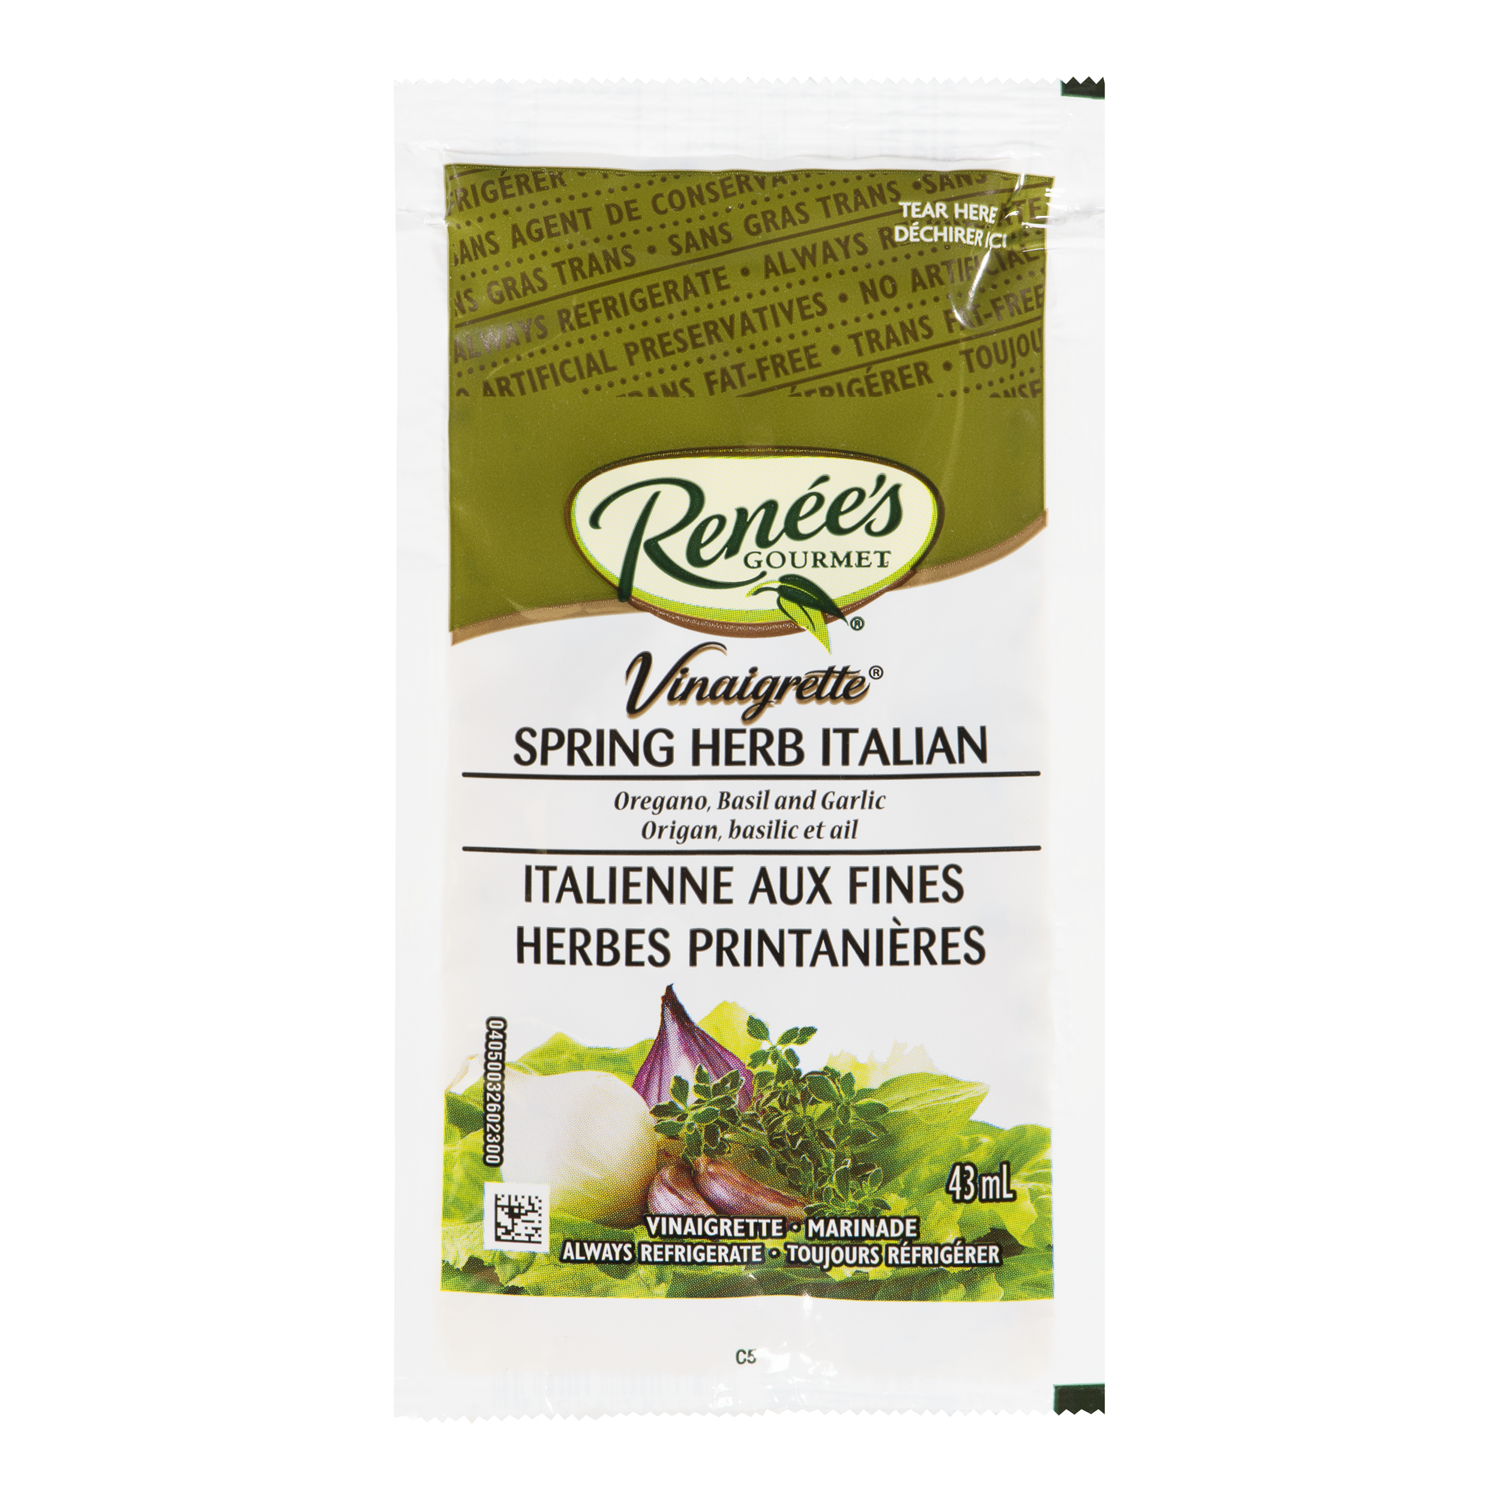  RENÉE'S Spring Herb Italian Vinaigrette 43ml 120 